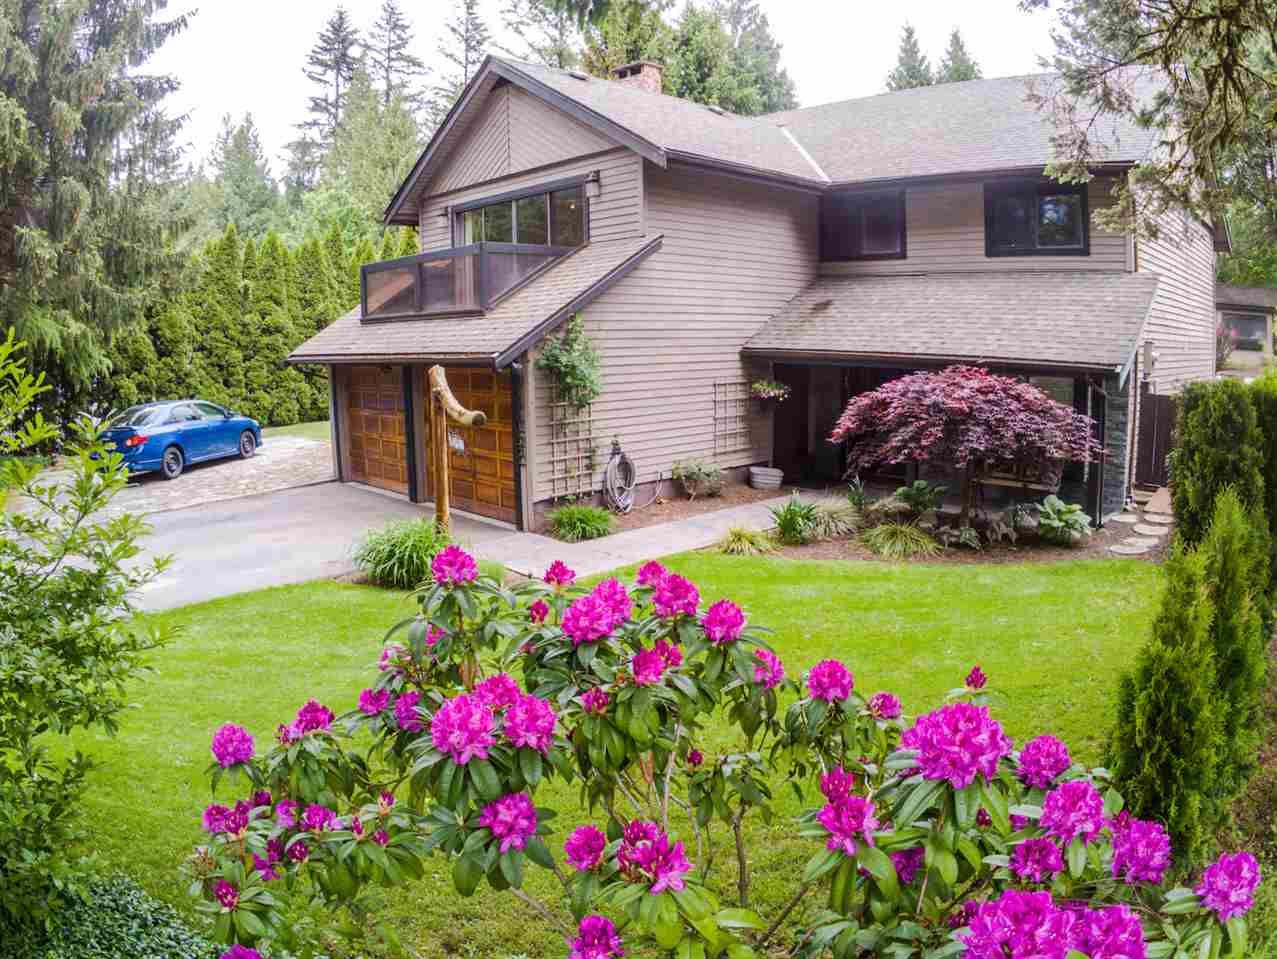 Main Photo: 40452 SKYLINE Drive in Squamish: Garibaldi Highlands House for sale : MLS®# R2460027